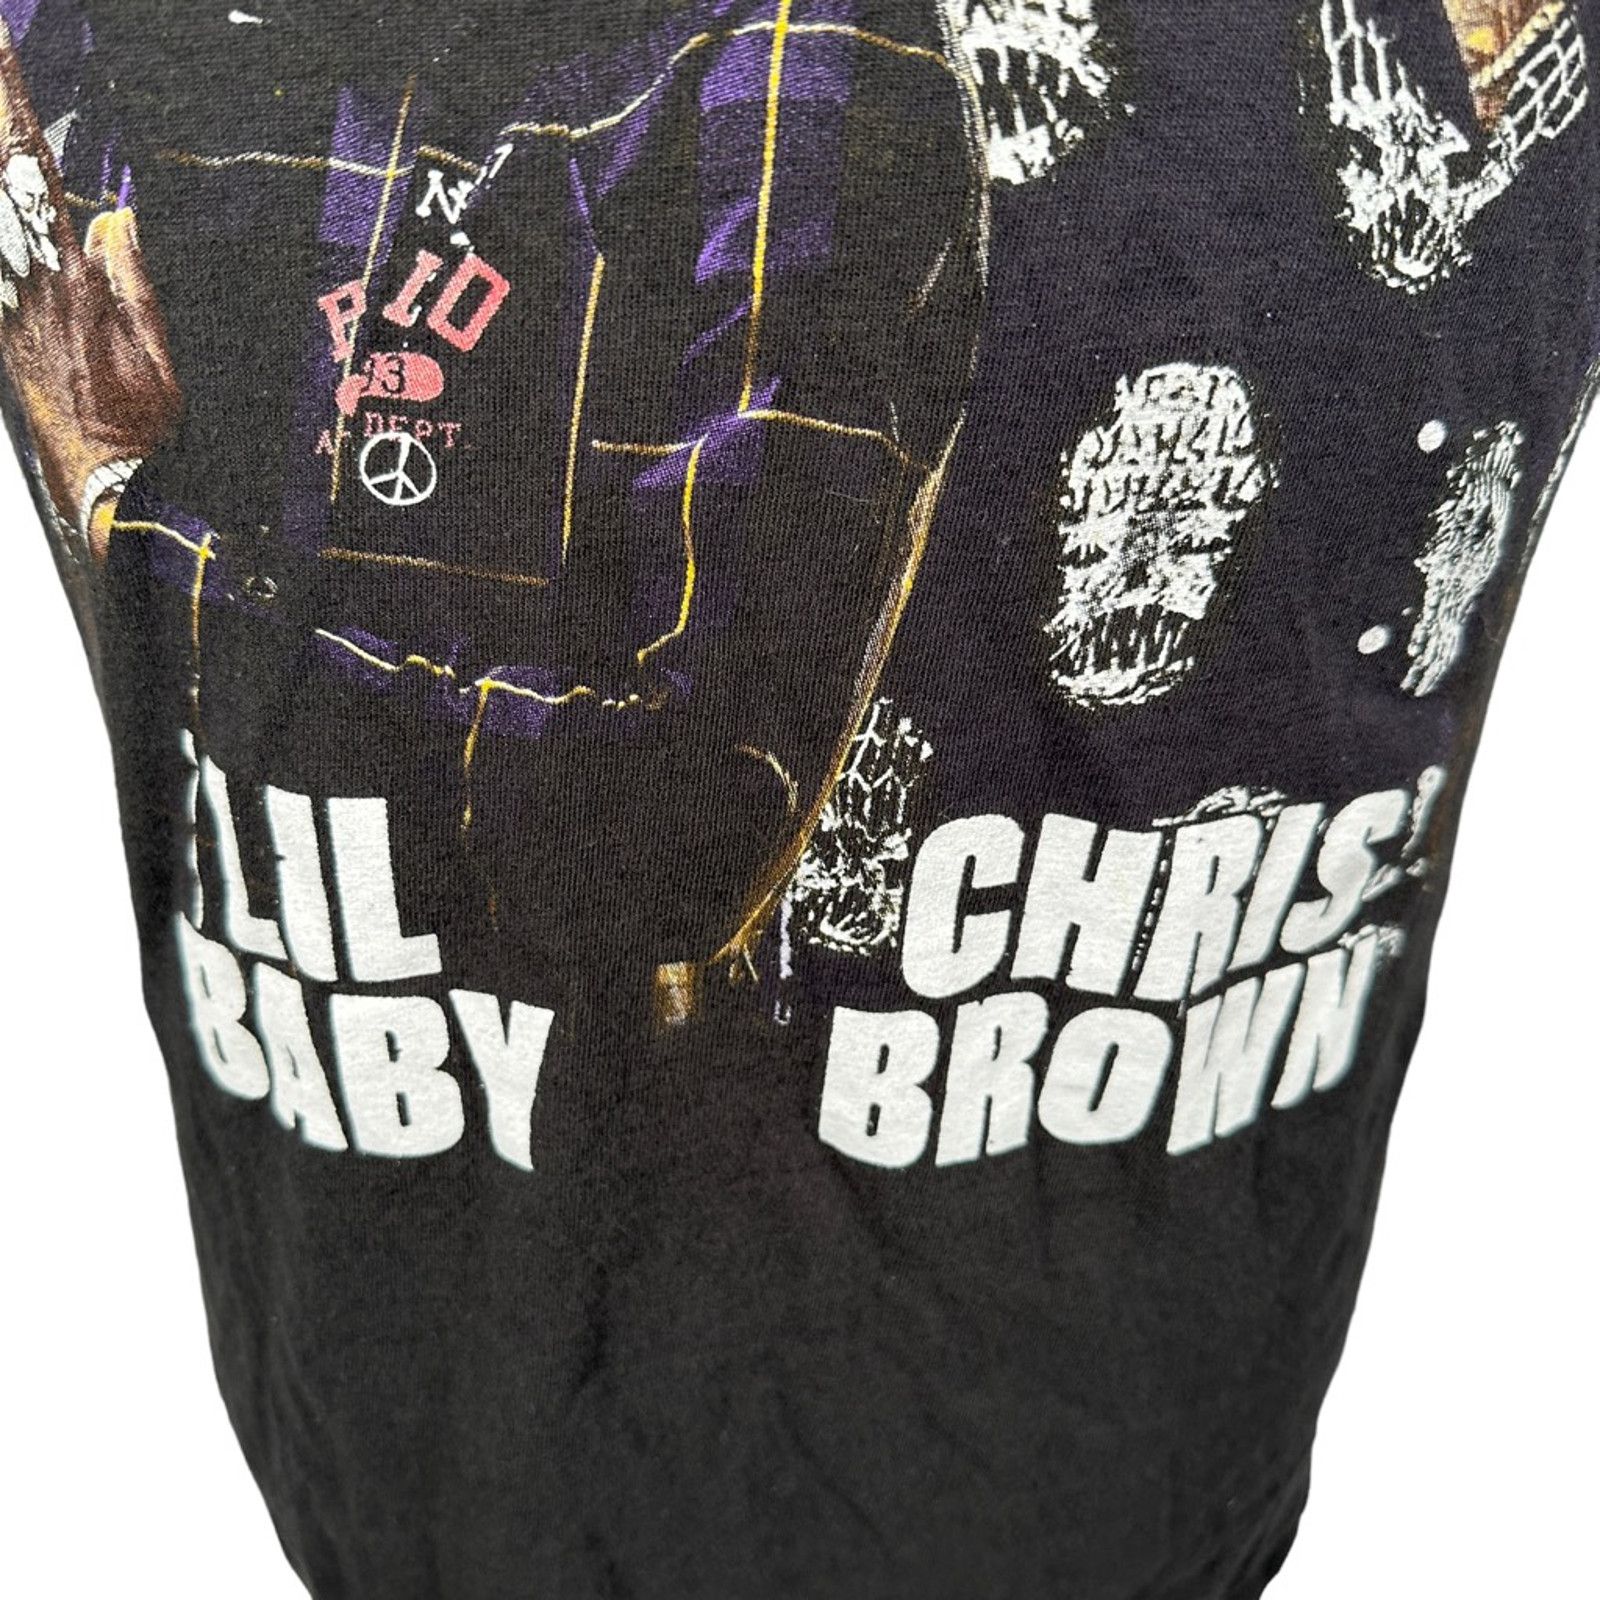 Delta Chris Brown Lil Baby Mens One Of Those Ones T-Shirt Black M Size US M / EU 48-50 / 2 - 6 Thumbnail